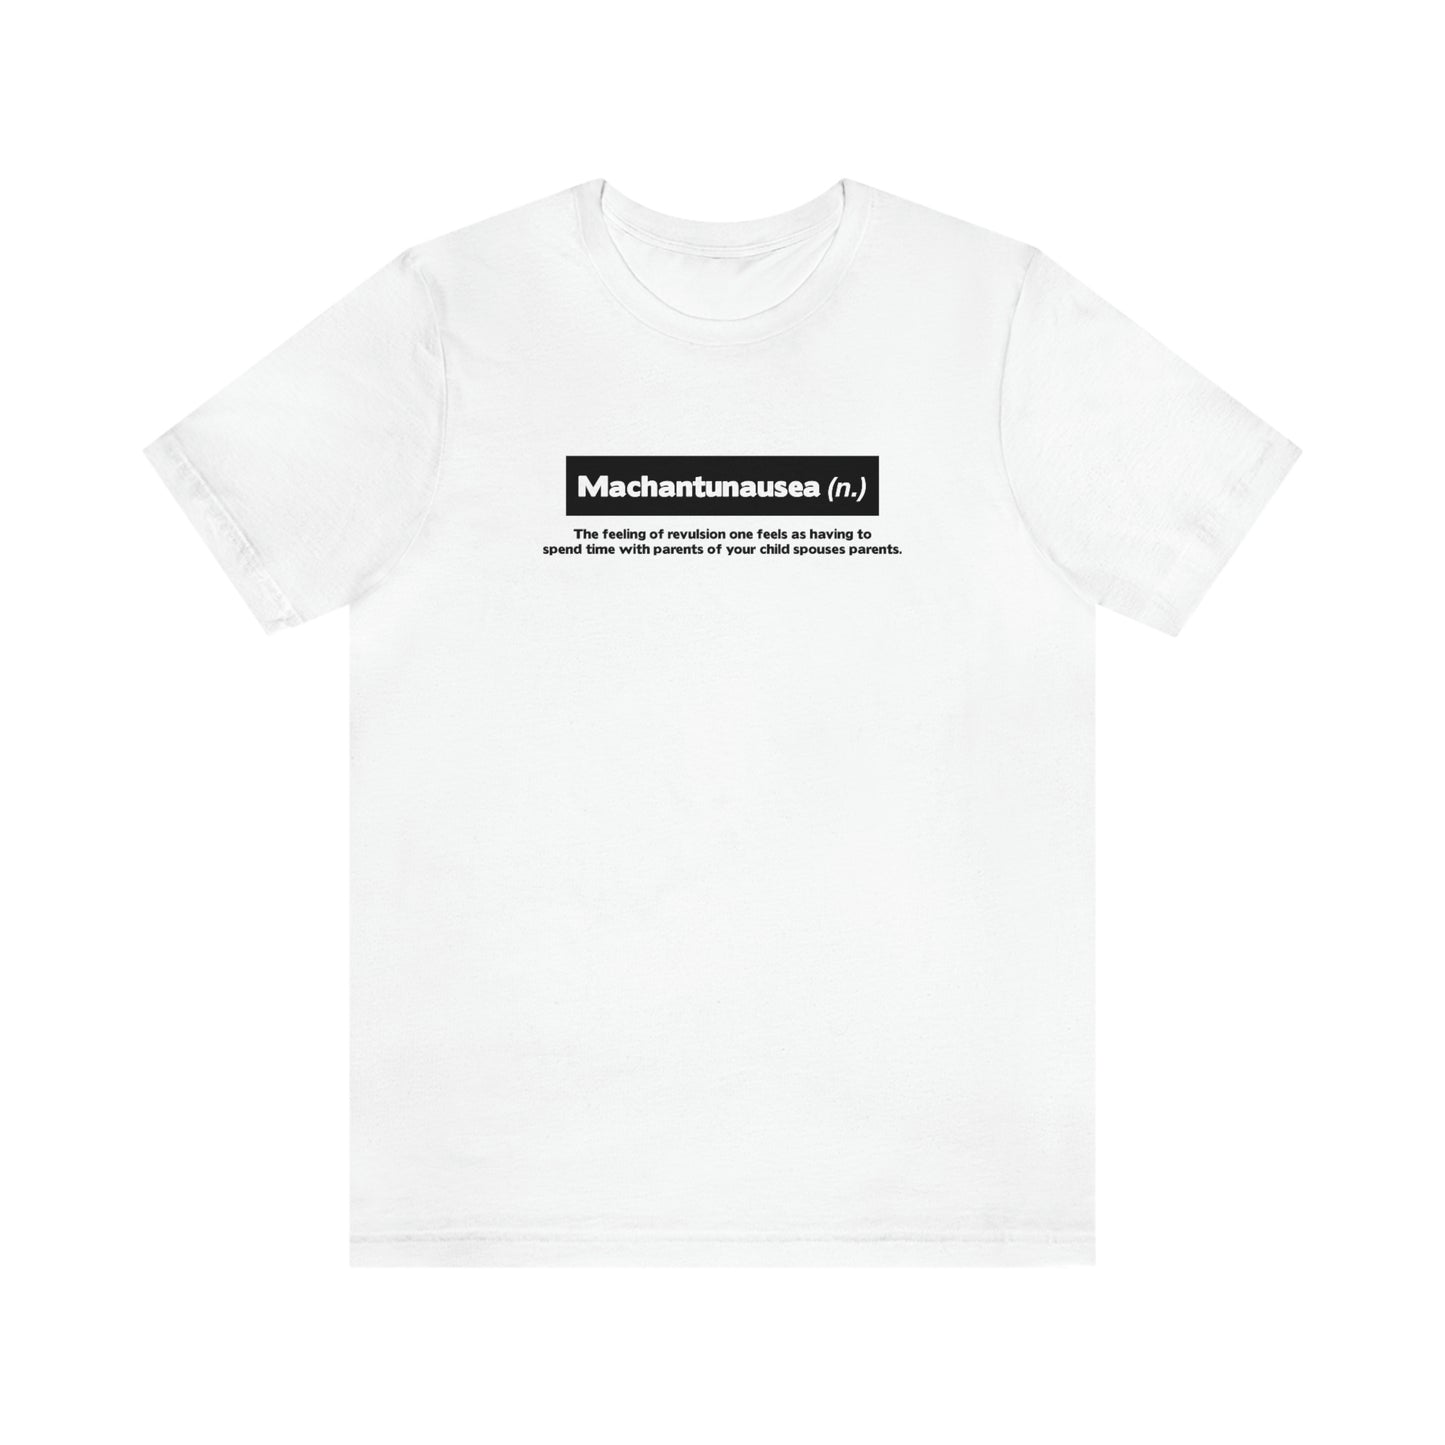 Machantunausea T-Shirt